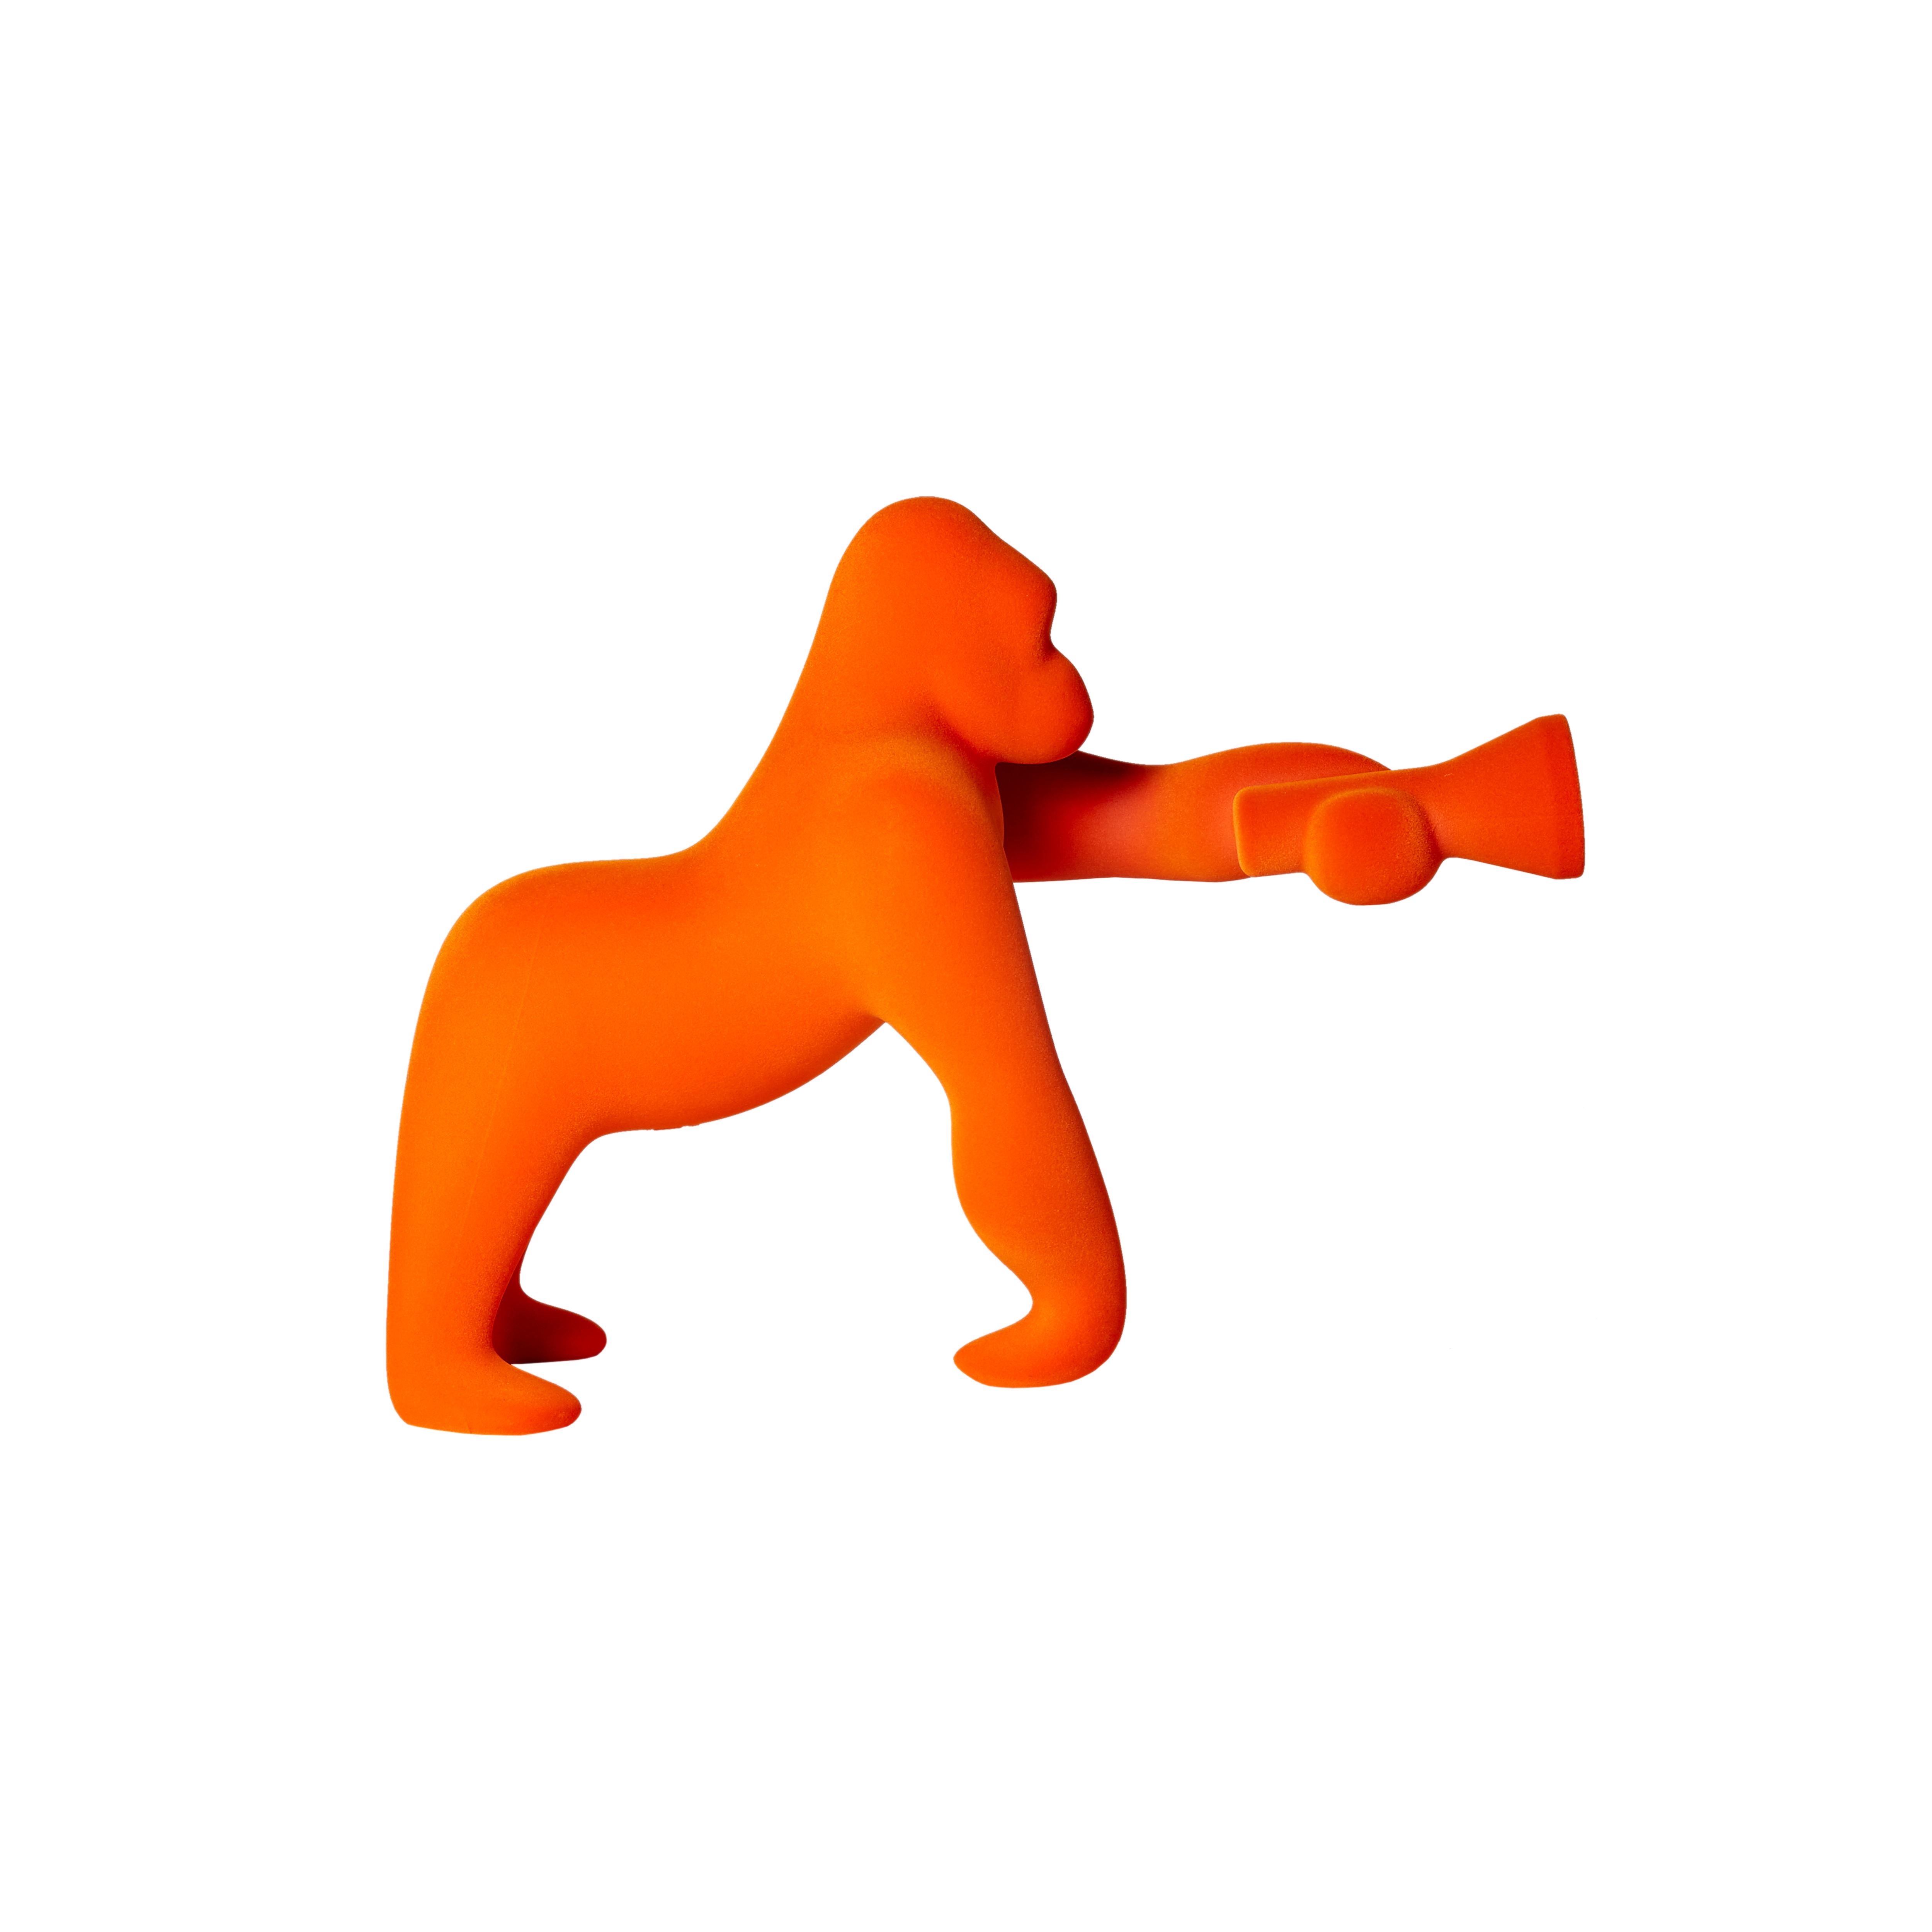 En vente : Orange Petite lampe de table ou lampadaire moderne sculpturale en velours orange Gorilla